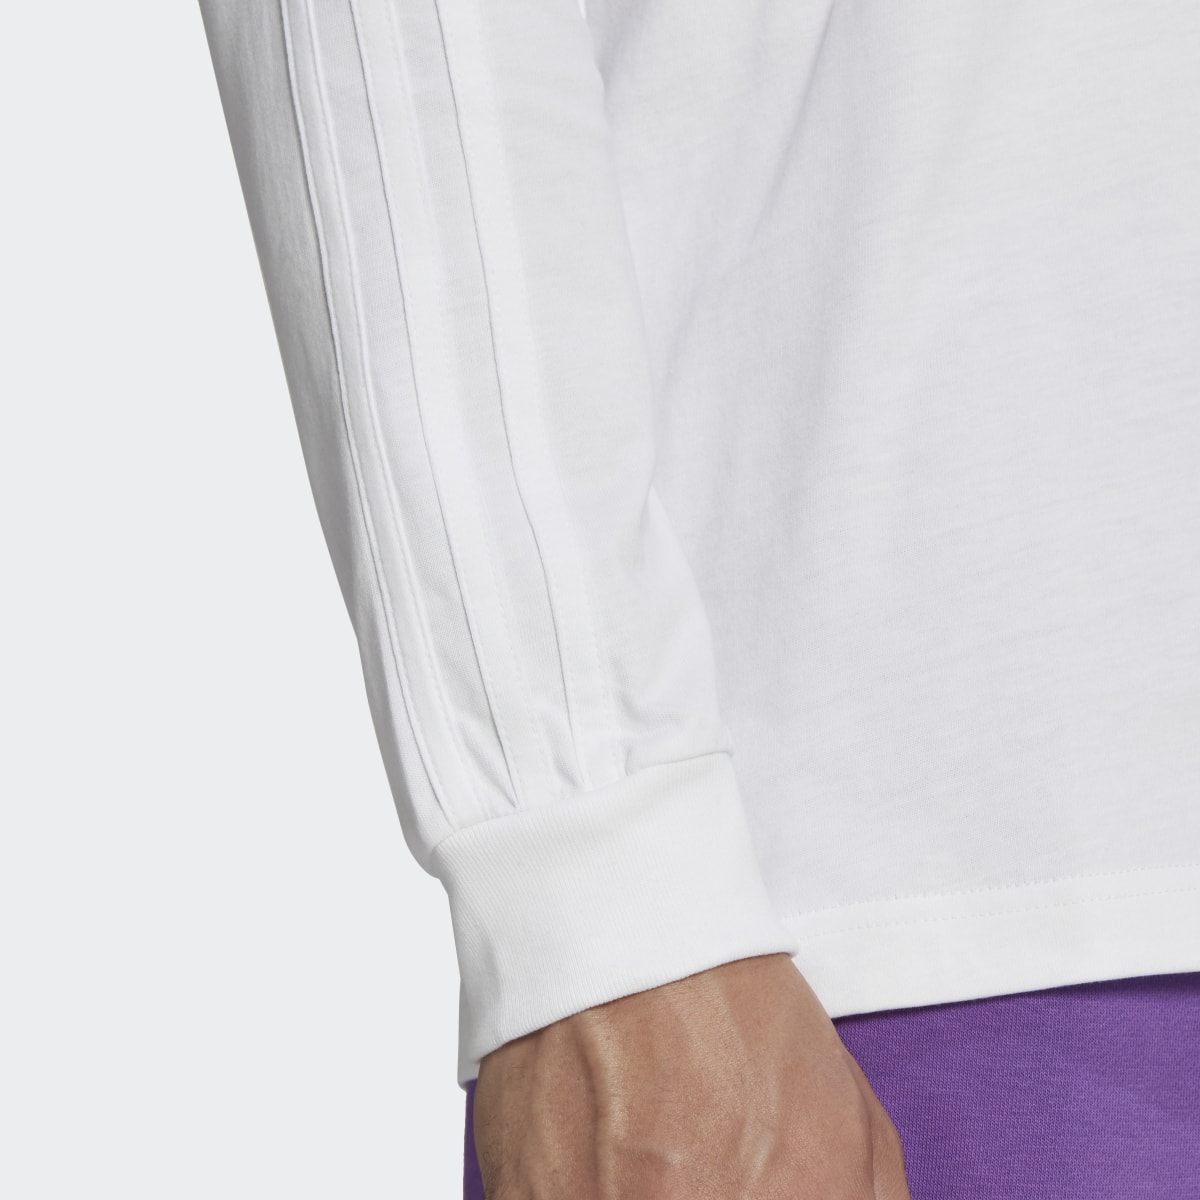 Adidas Graphics Camo Stripe Long Sleeve Tee. 7